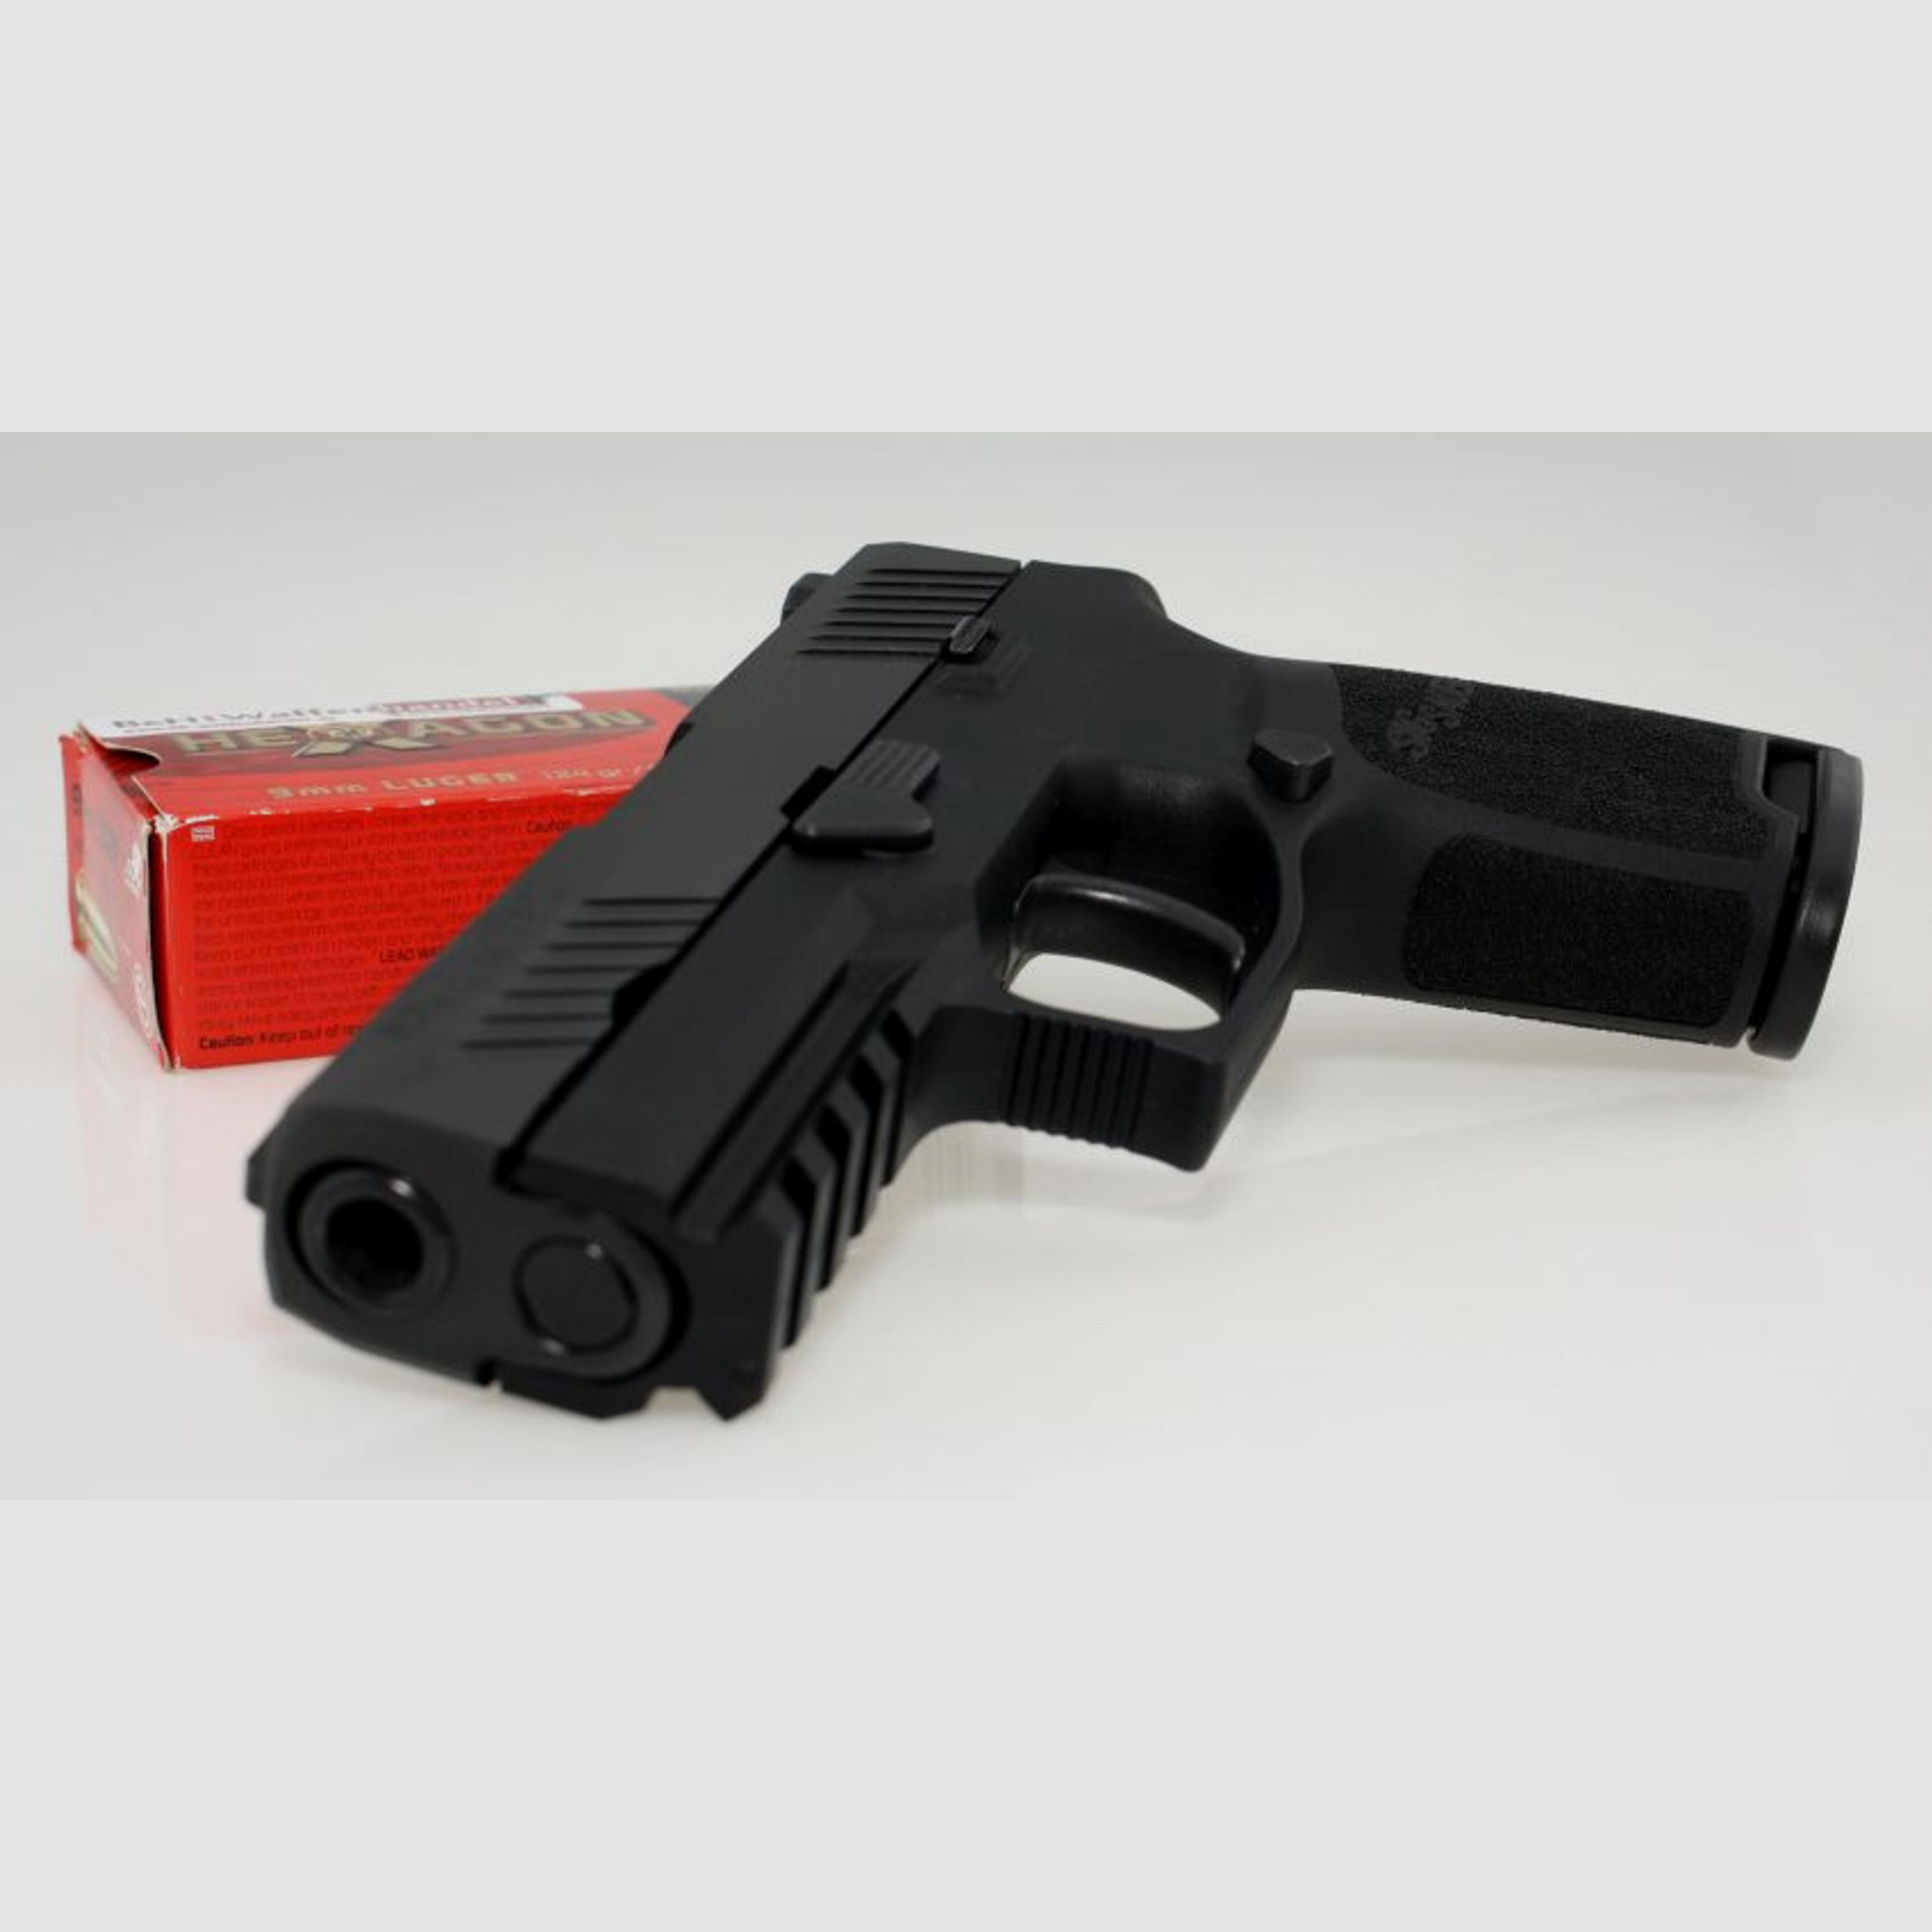 Neuwaffe, auf Lager: Sig Sauer P320 Compact 9mm Kompaktpistole 